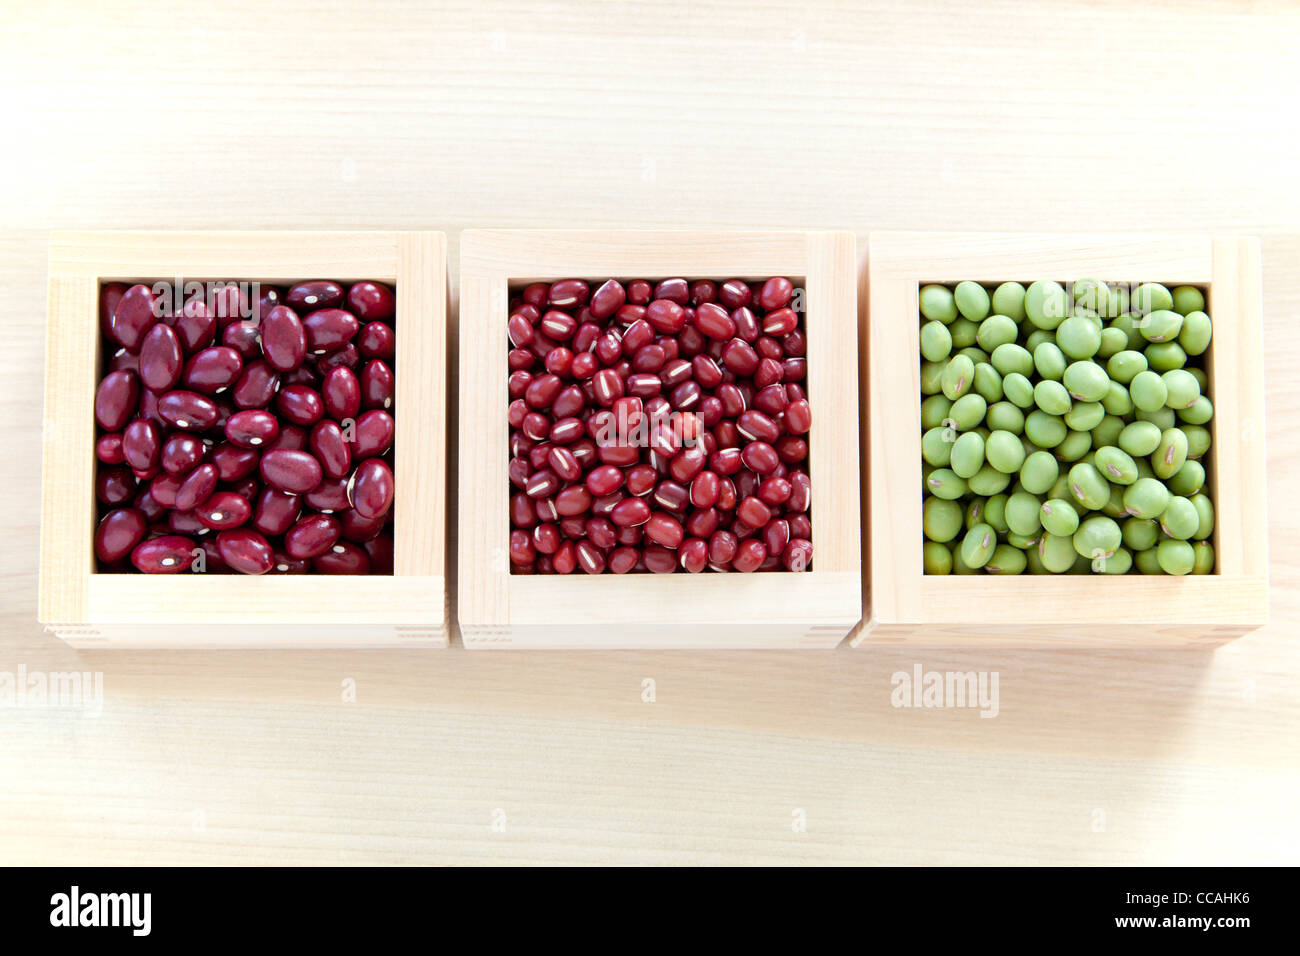 Three Boxes of Beans Stock Photo